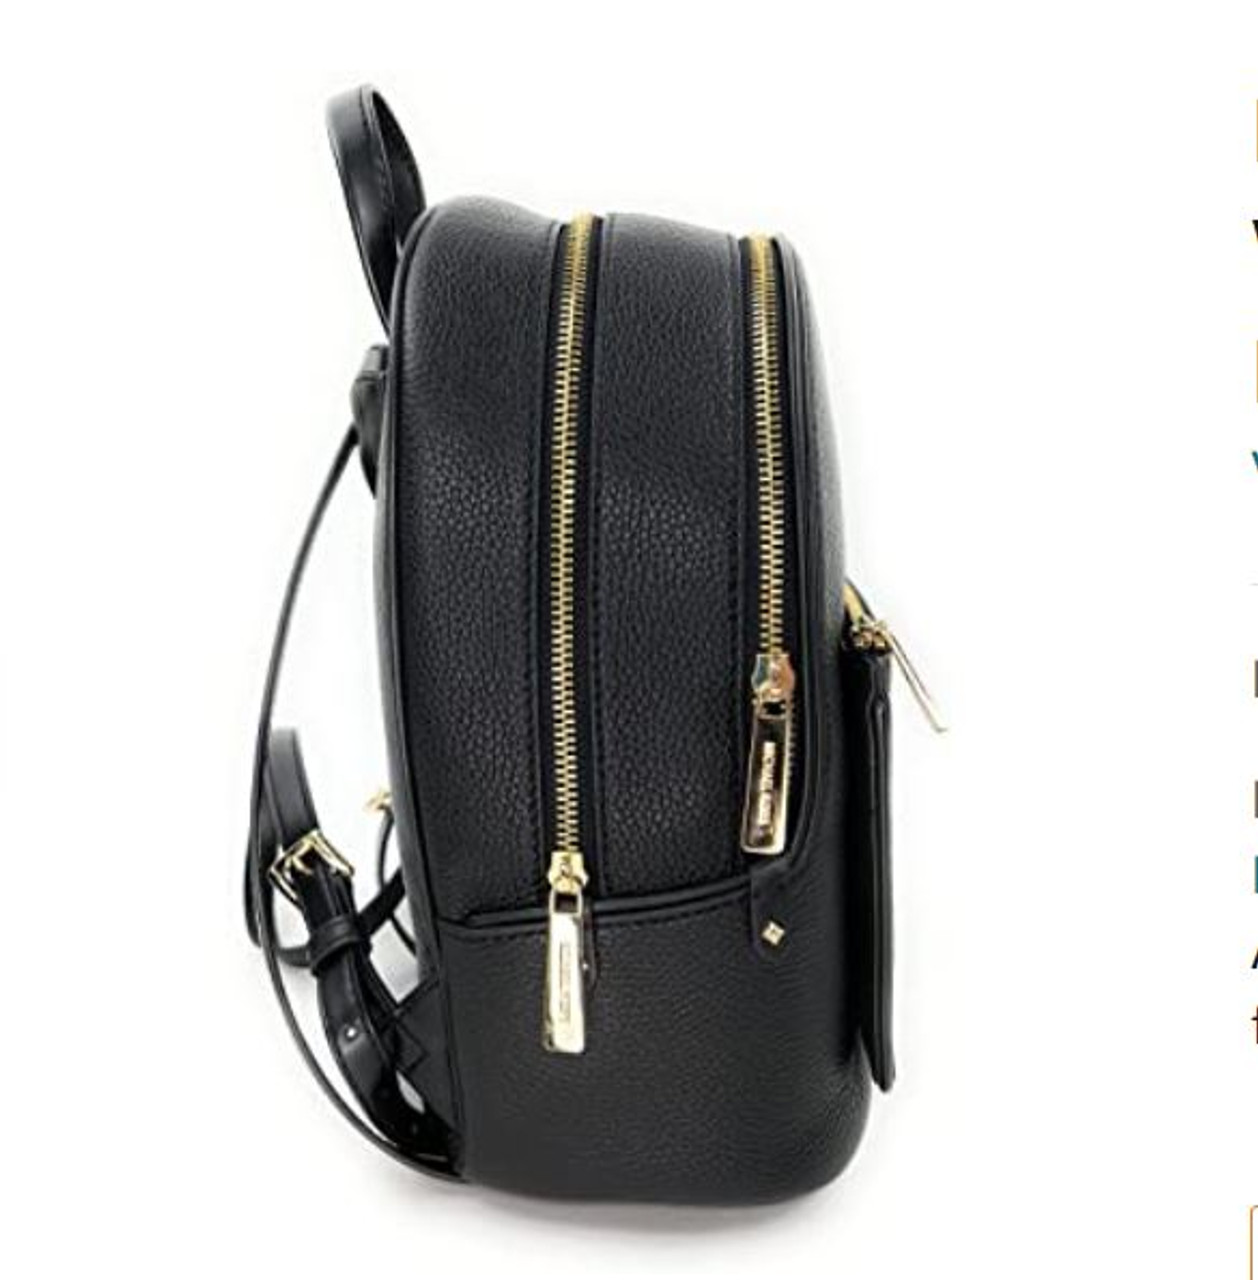 Michael Kors Veronica Extra-Small Saffiano Leather Crossbody Bag  (Vanilla/Acorn) 32S3G6VC0B-149 - AllGlitters